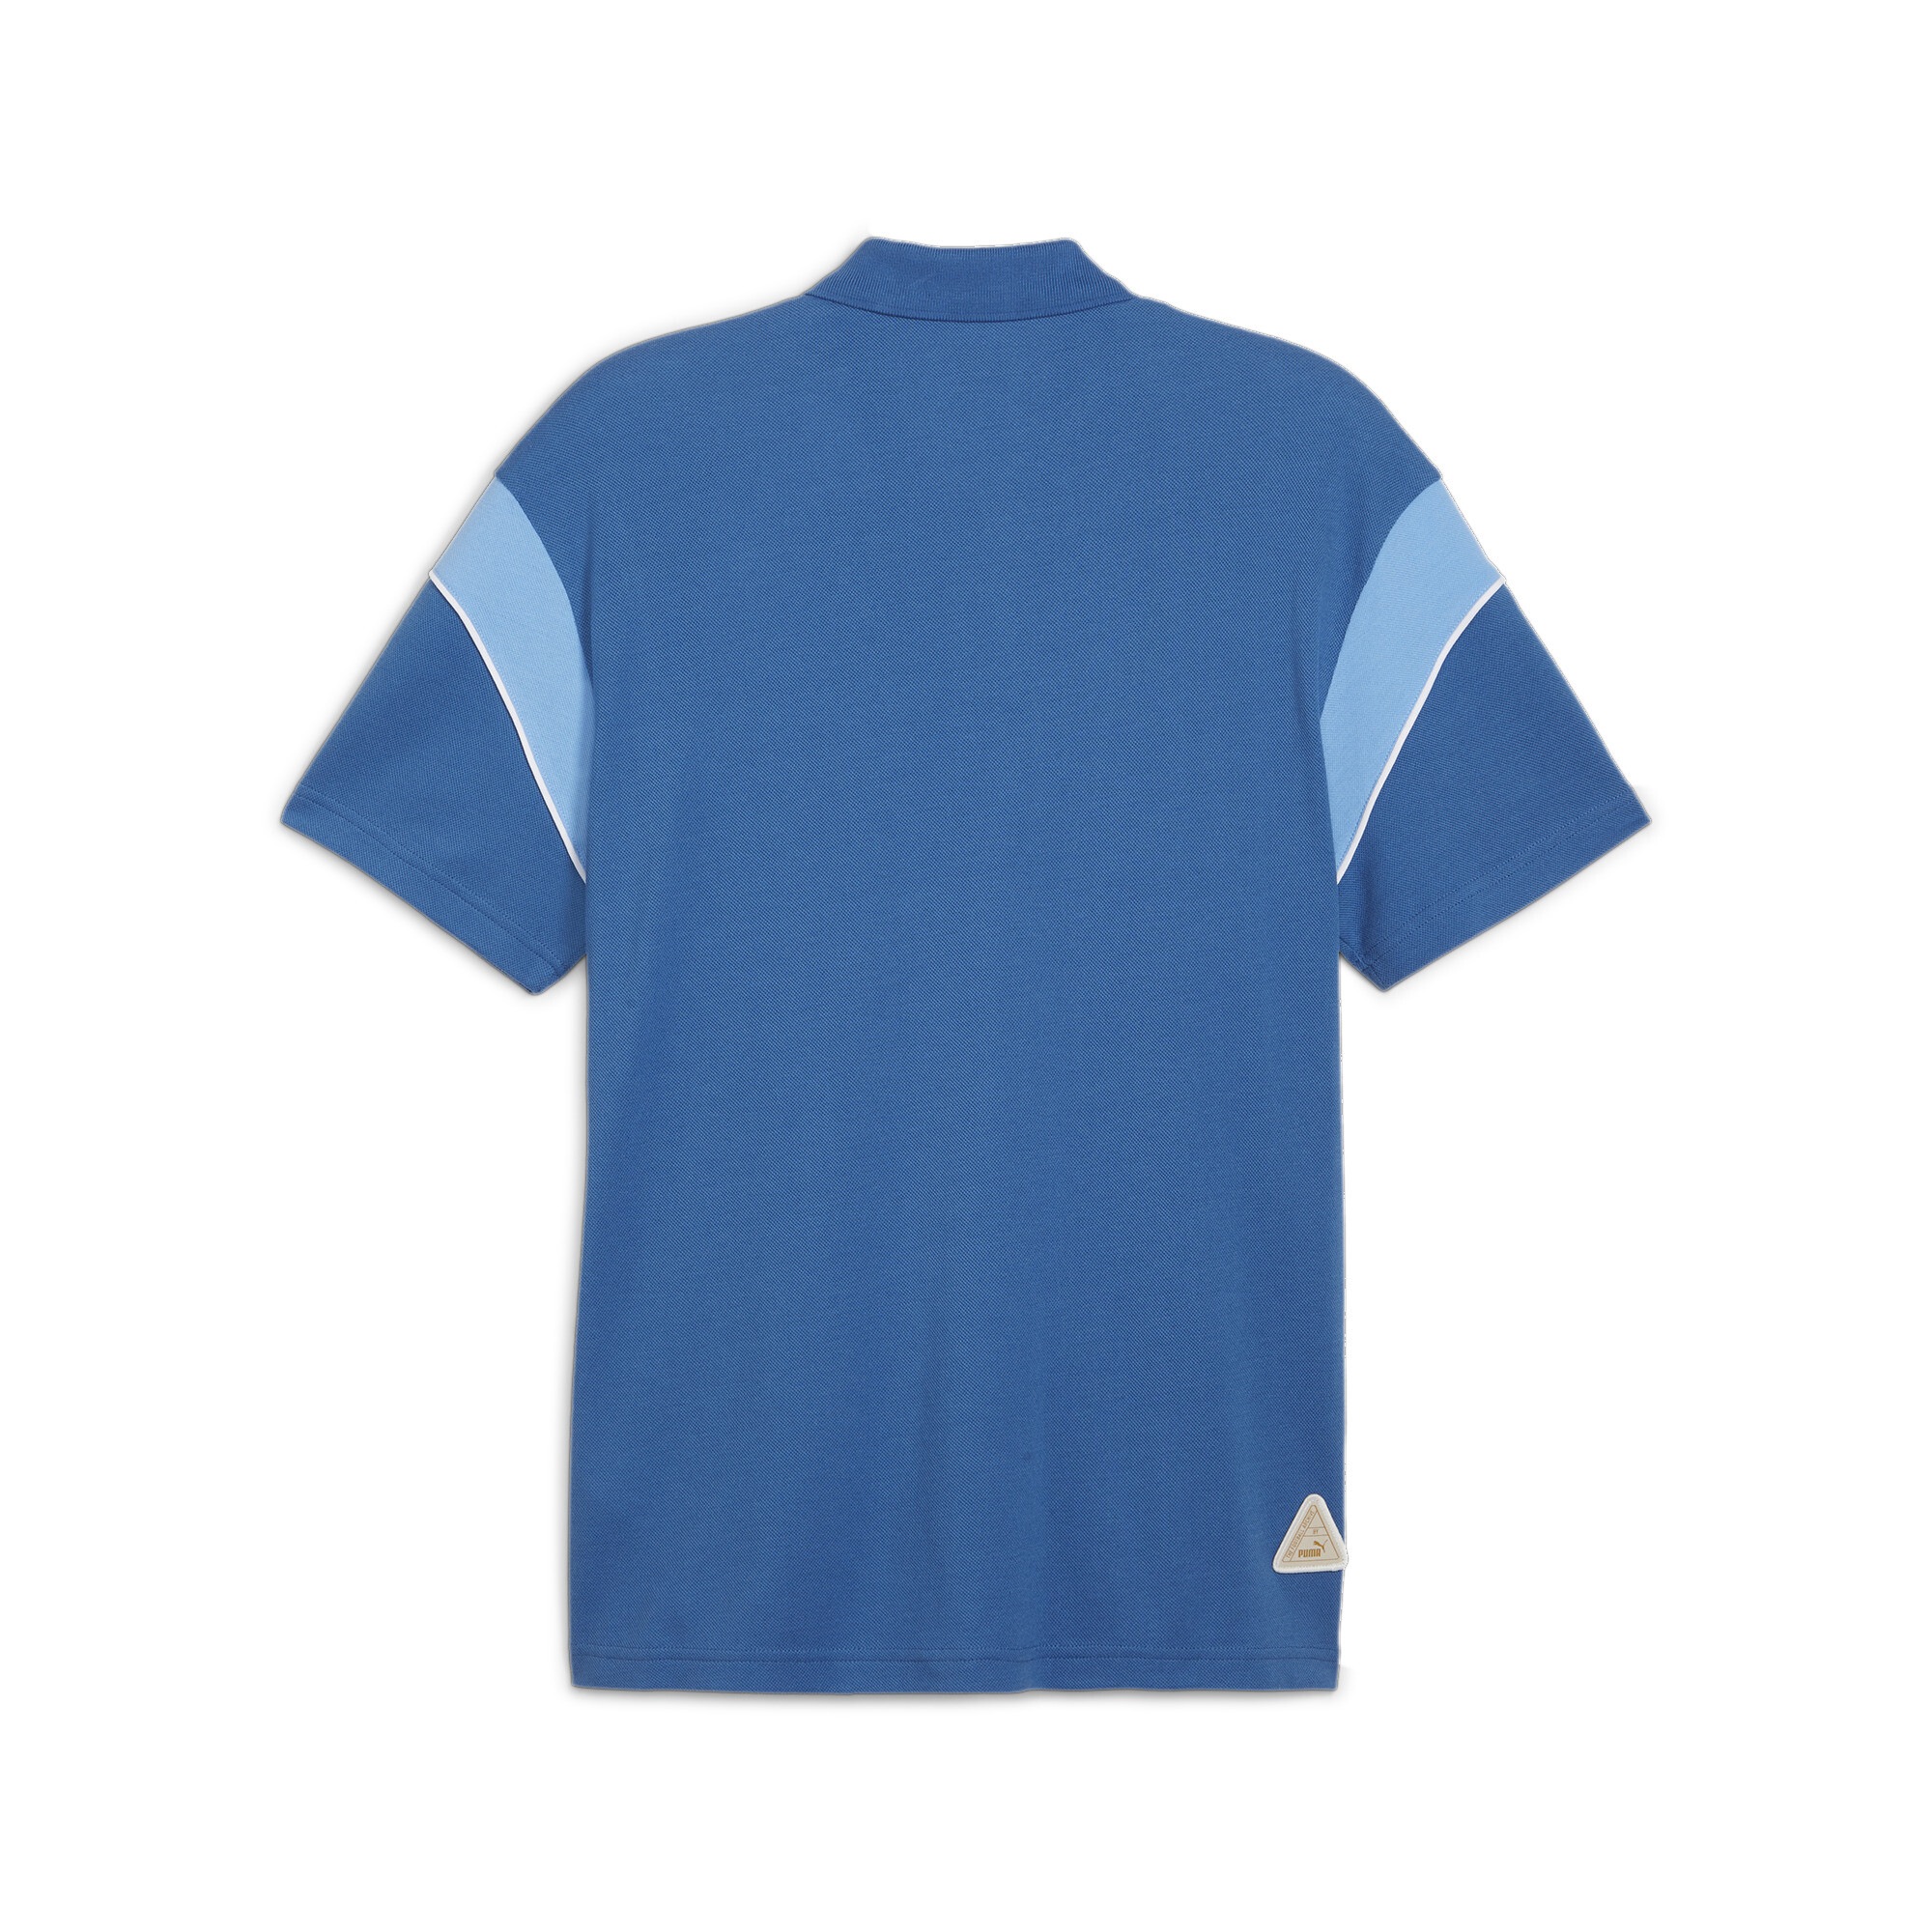 PUMA Poloshirt »Manchester City FtblArchive Poloshirt Herren«